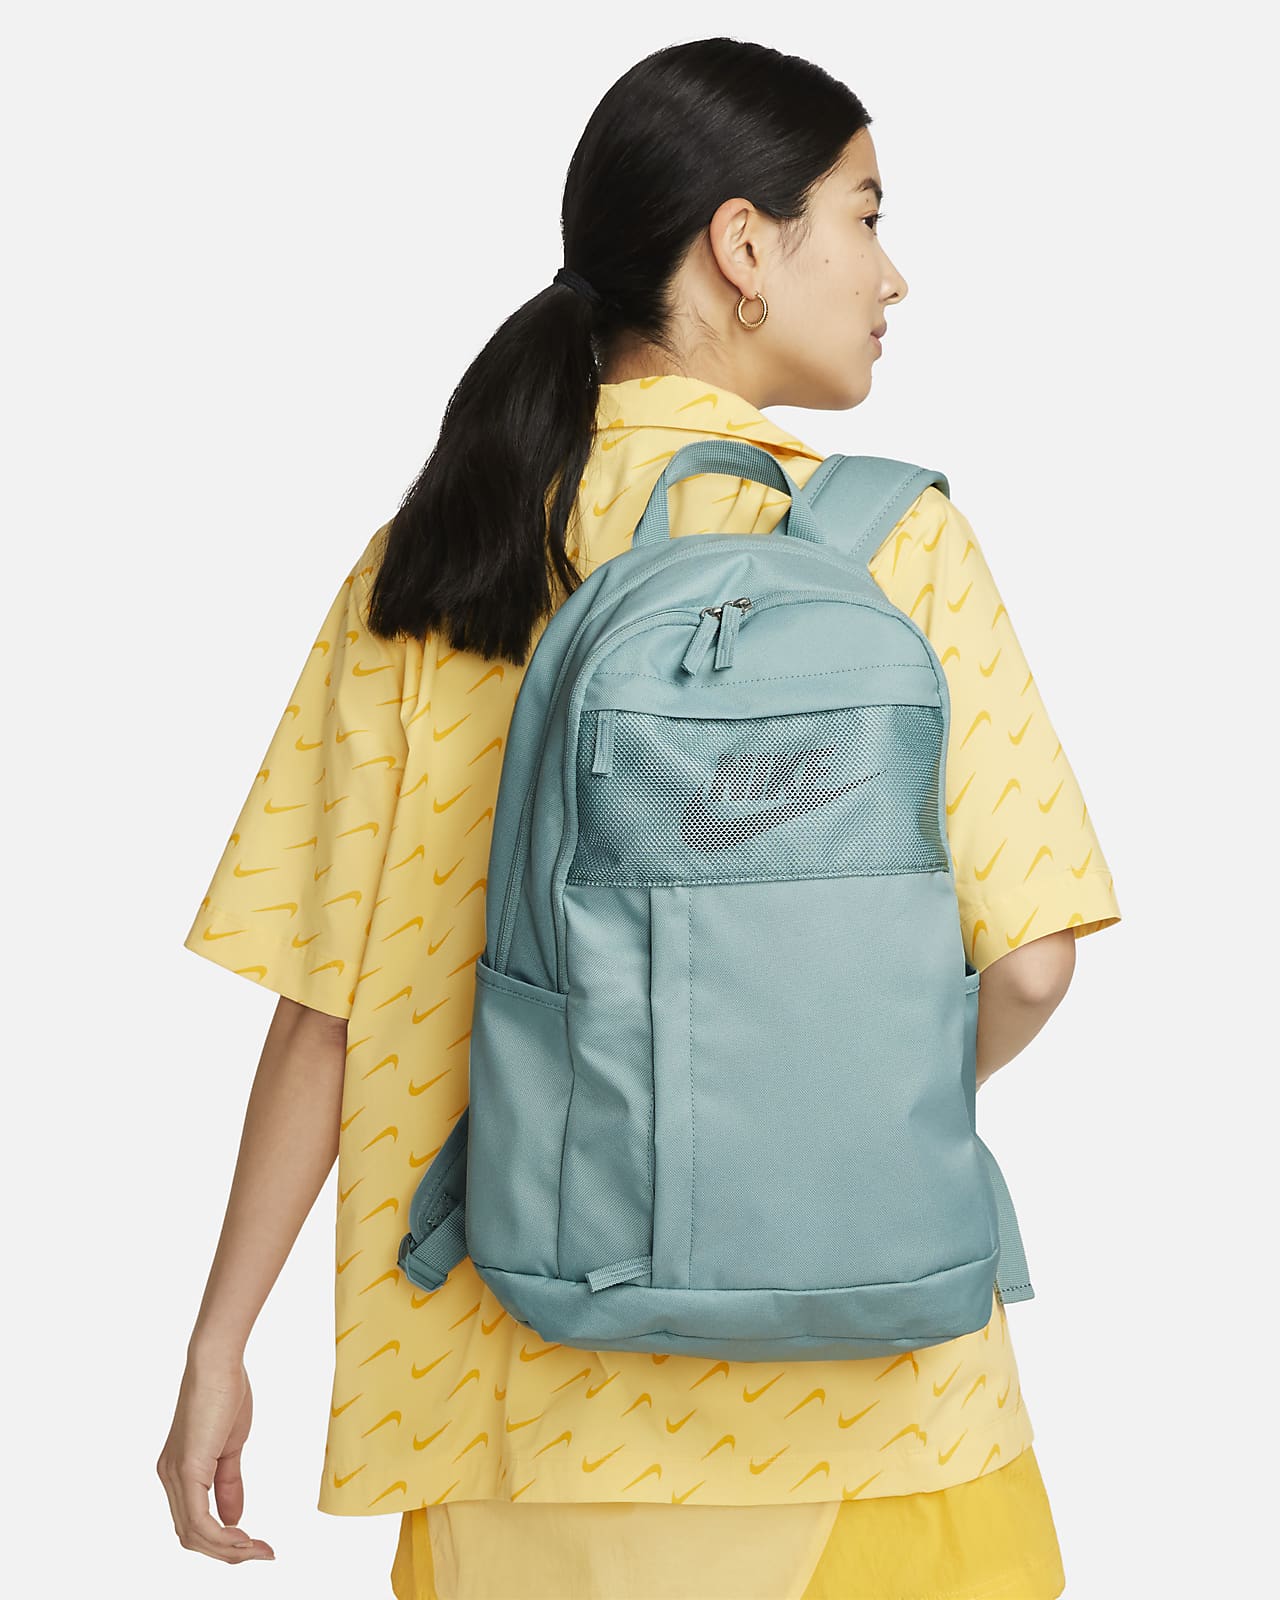 Men's Backpacks & Bags. Nike PT